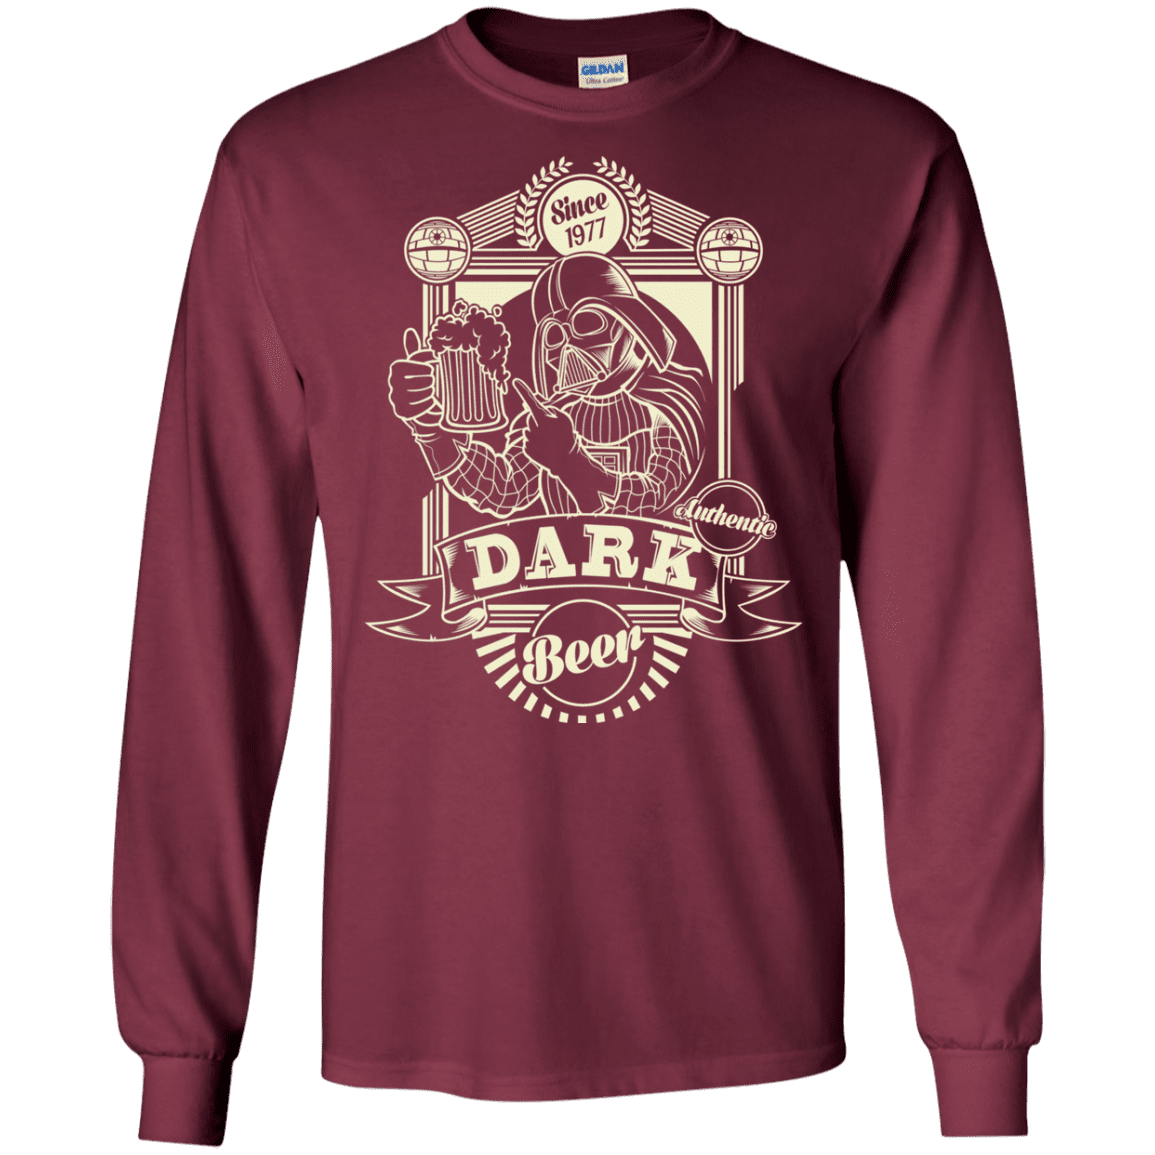 T-Shirts Maroon / S Dark Beer Men's Long Sleeve T-Shirt